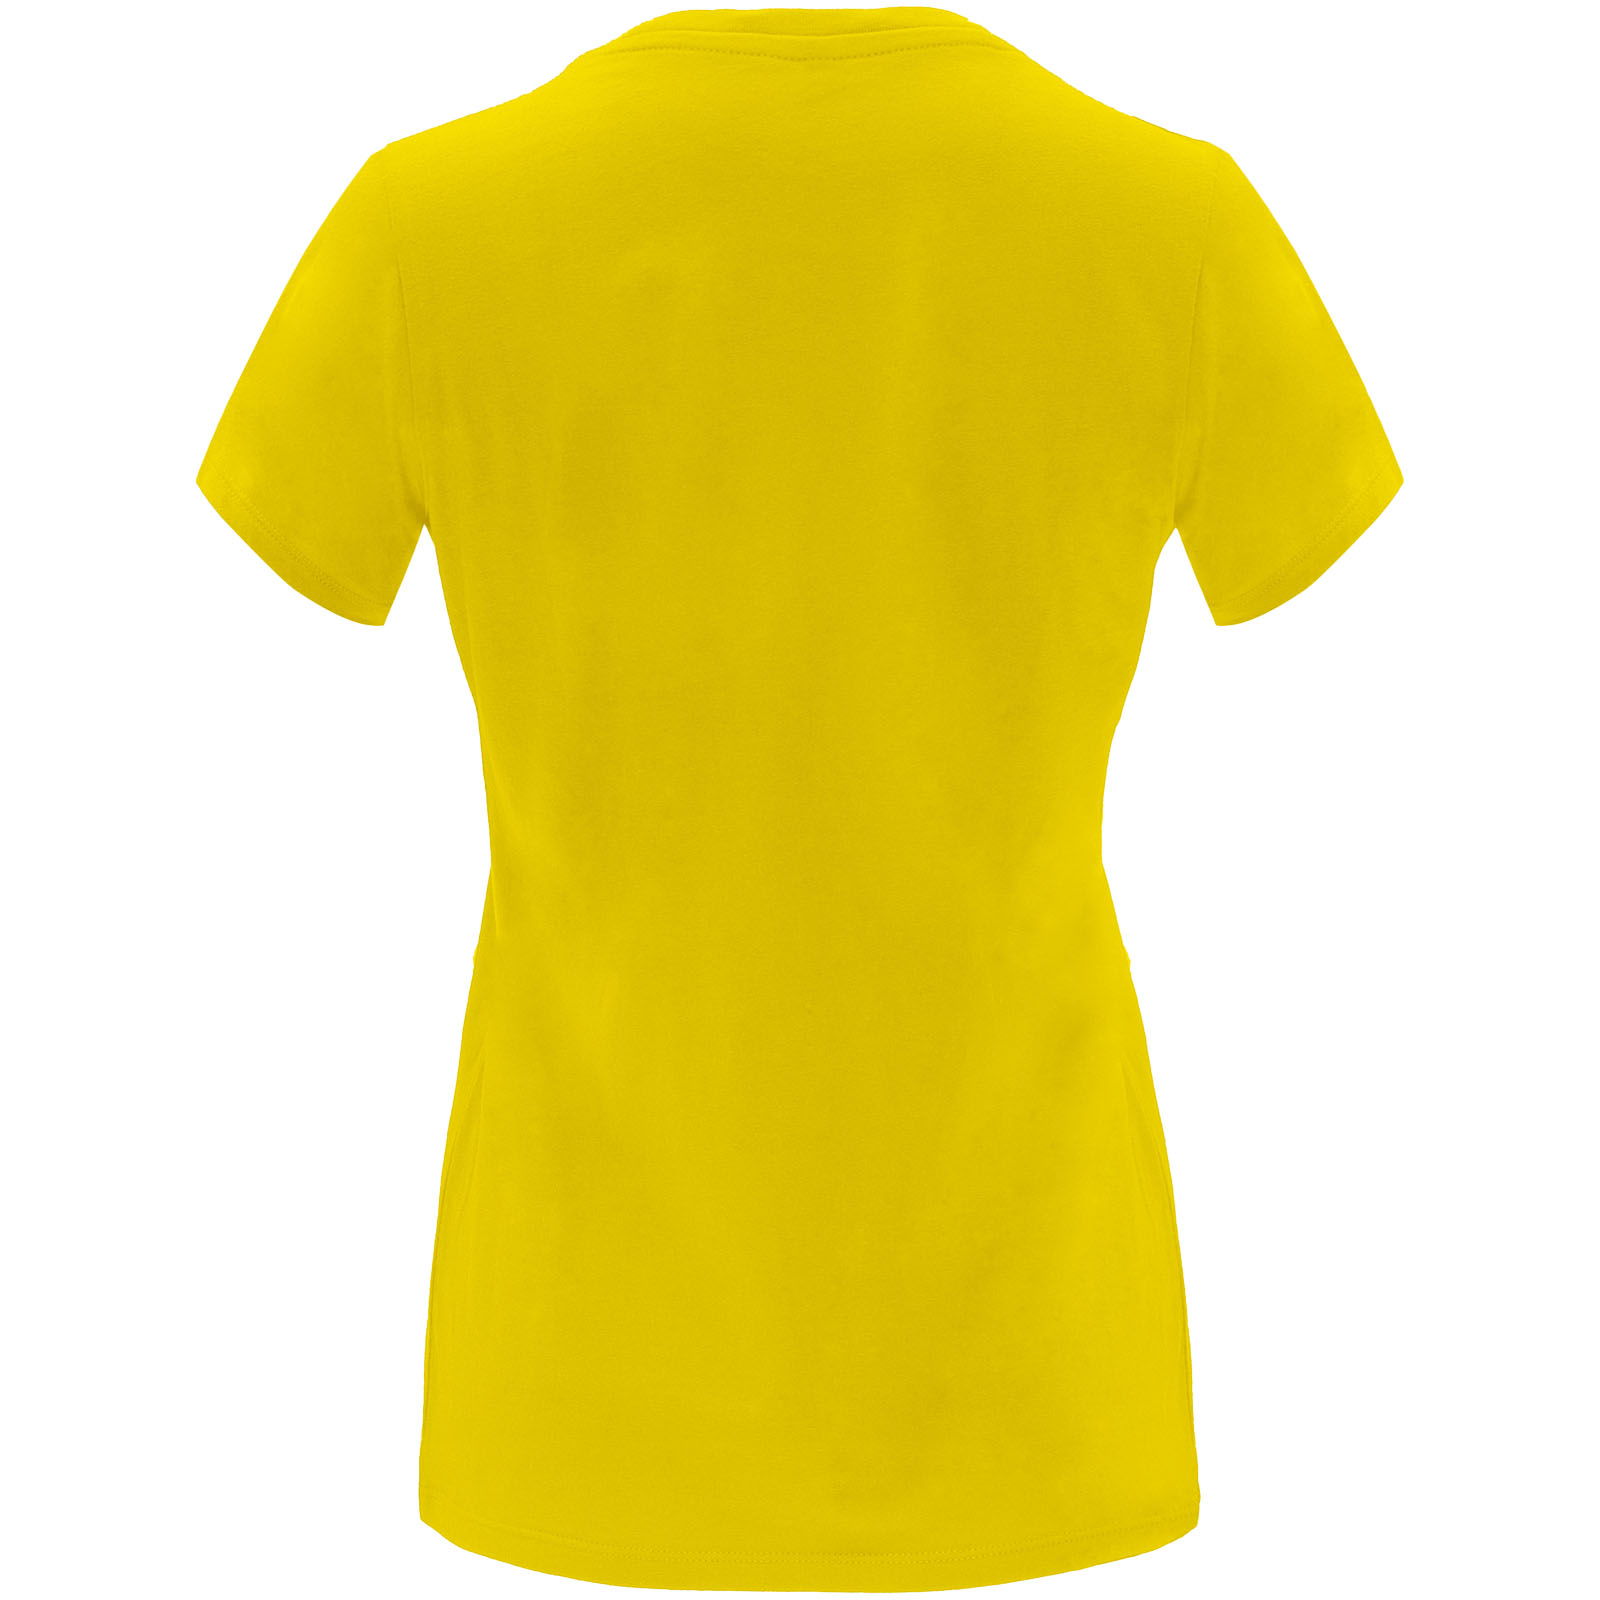 Advertising T-shirts - Capri short sleeve women's t-shirt - 1